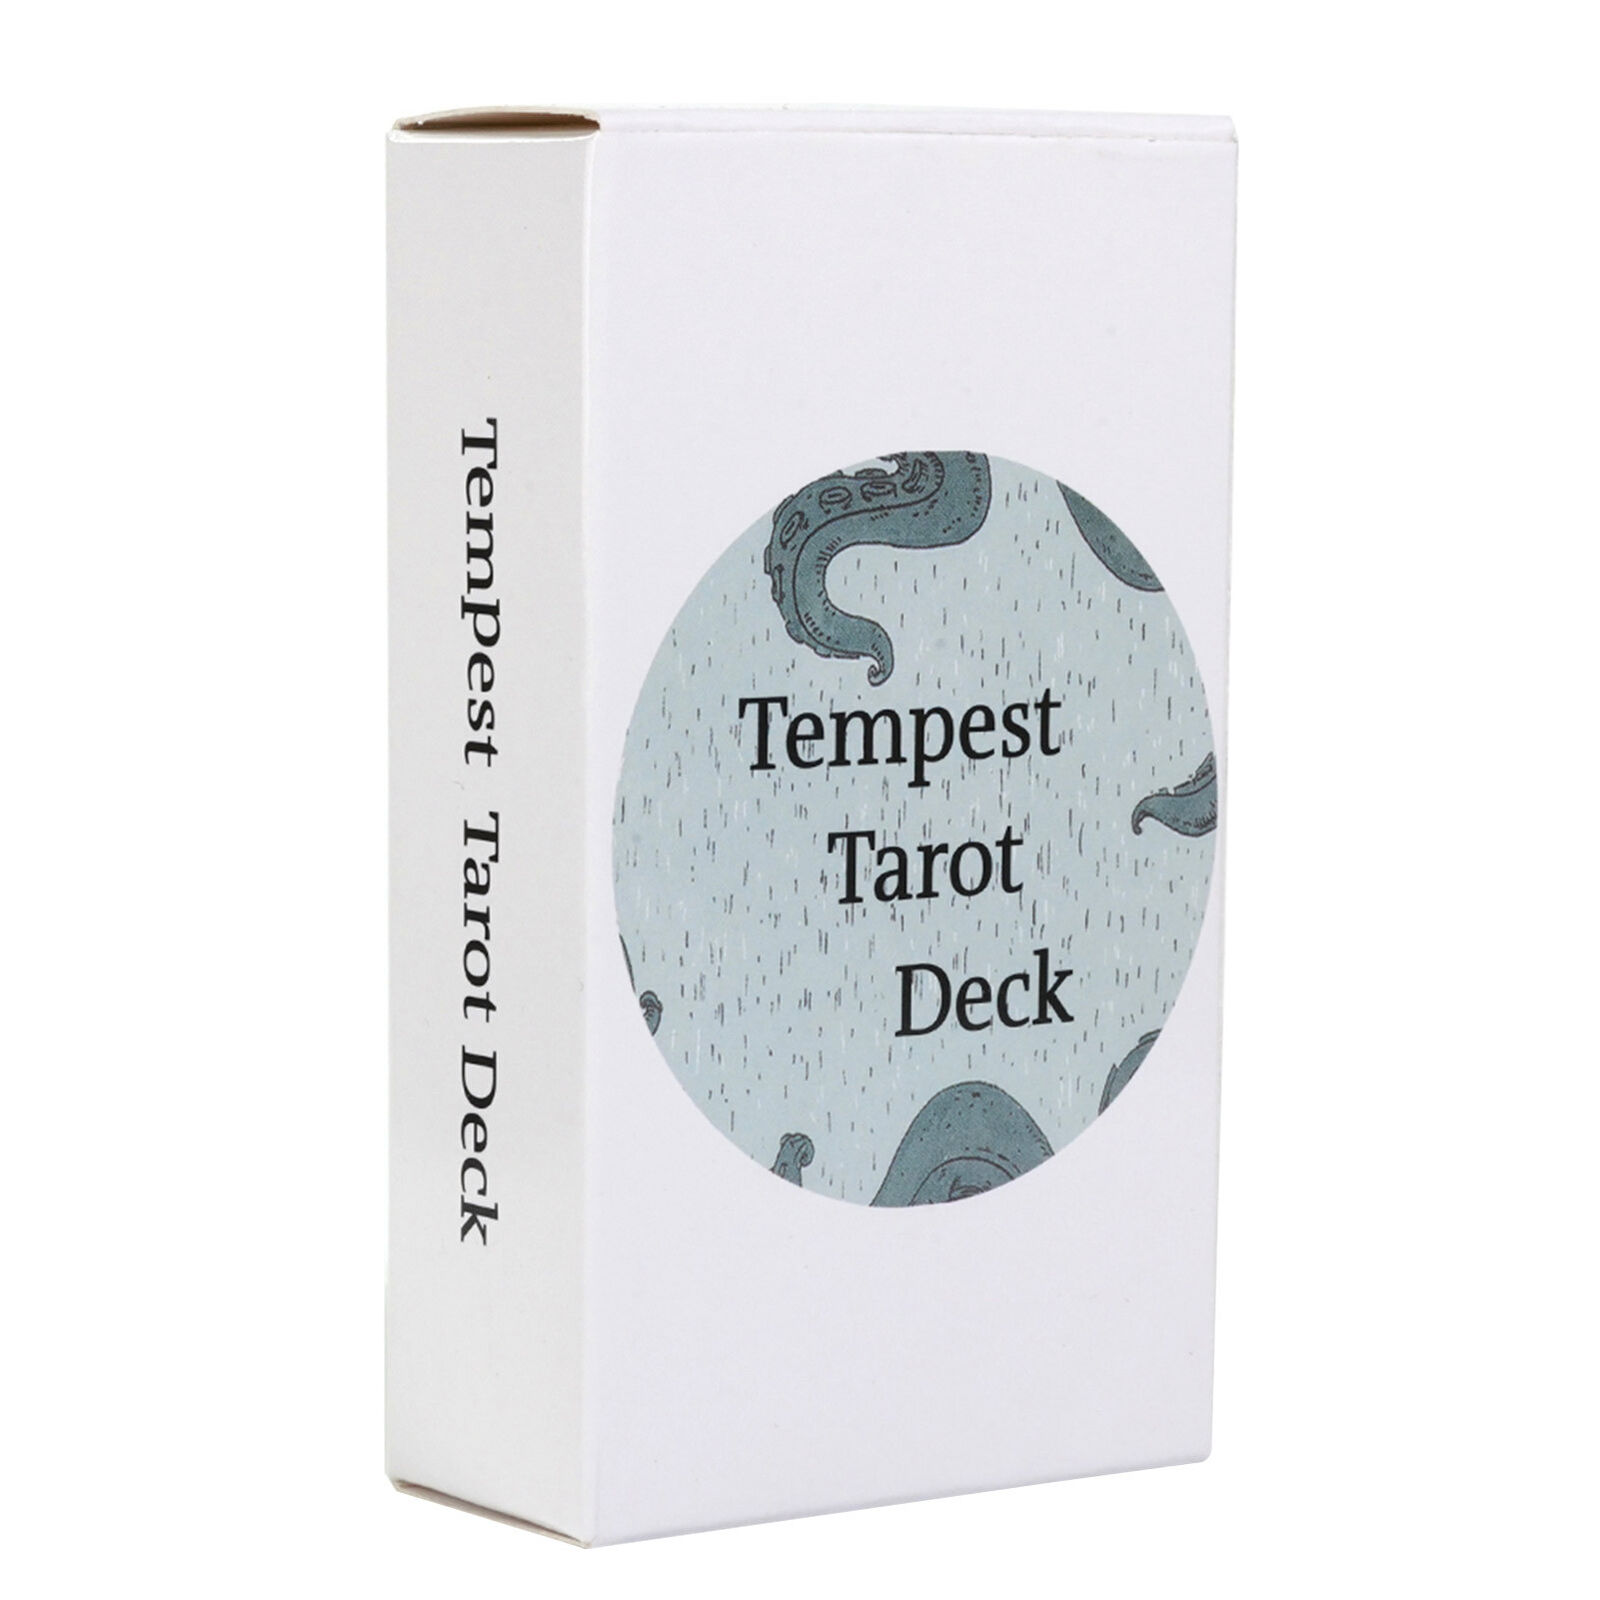 Tempest Tarot Deck Tarot 78 Cards Brand New